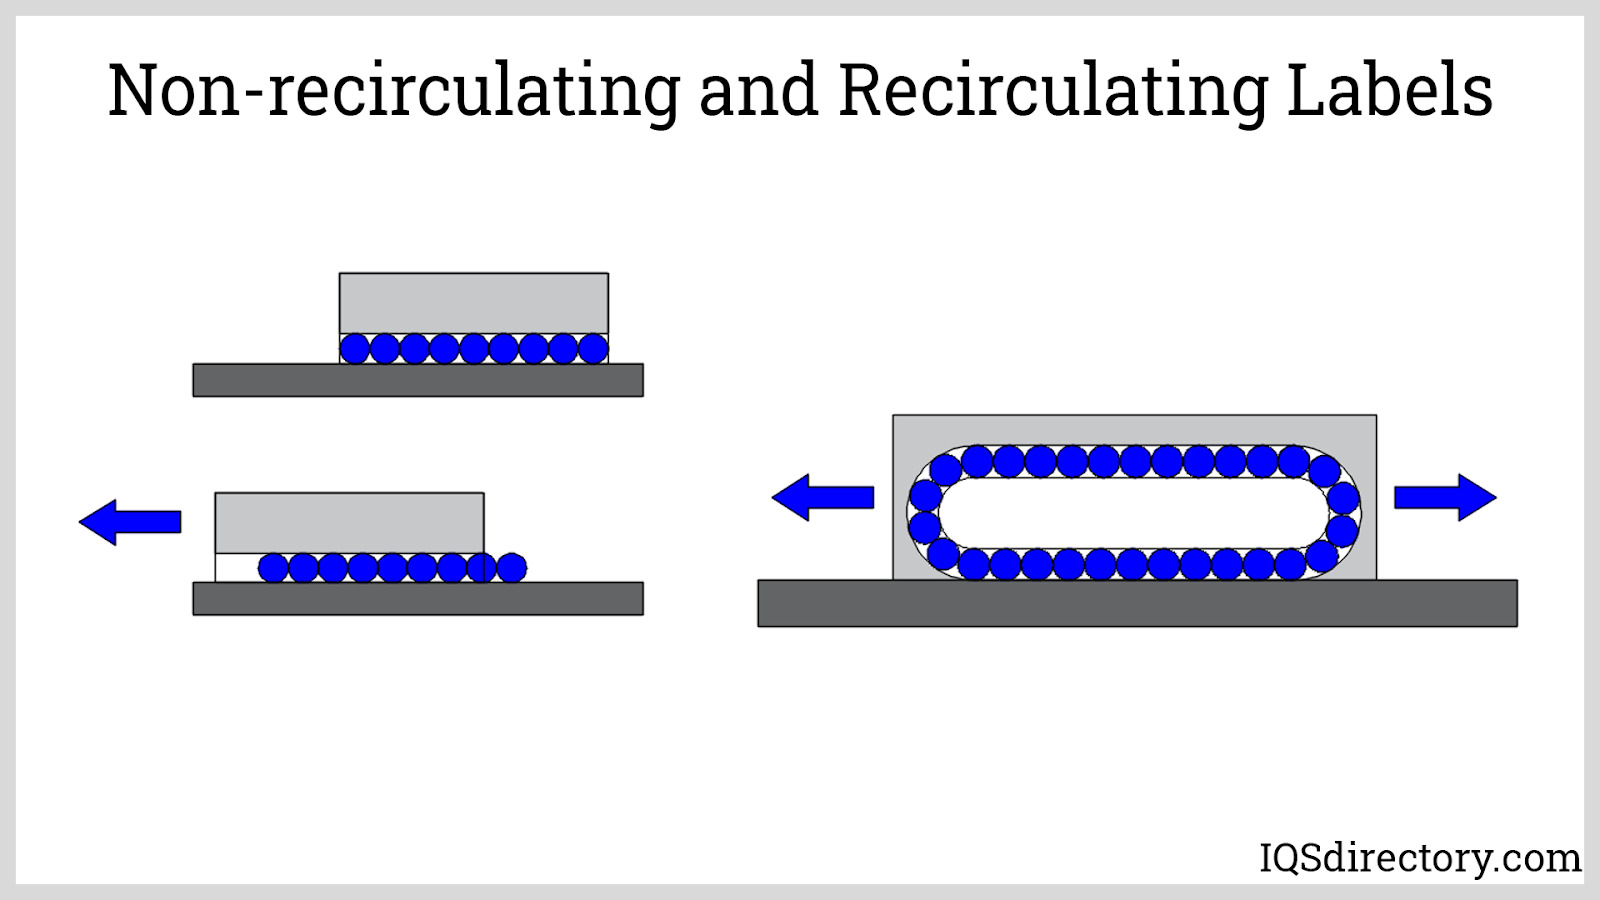 Non-recirculating and Recirculating Labels